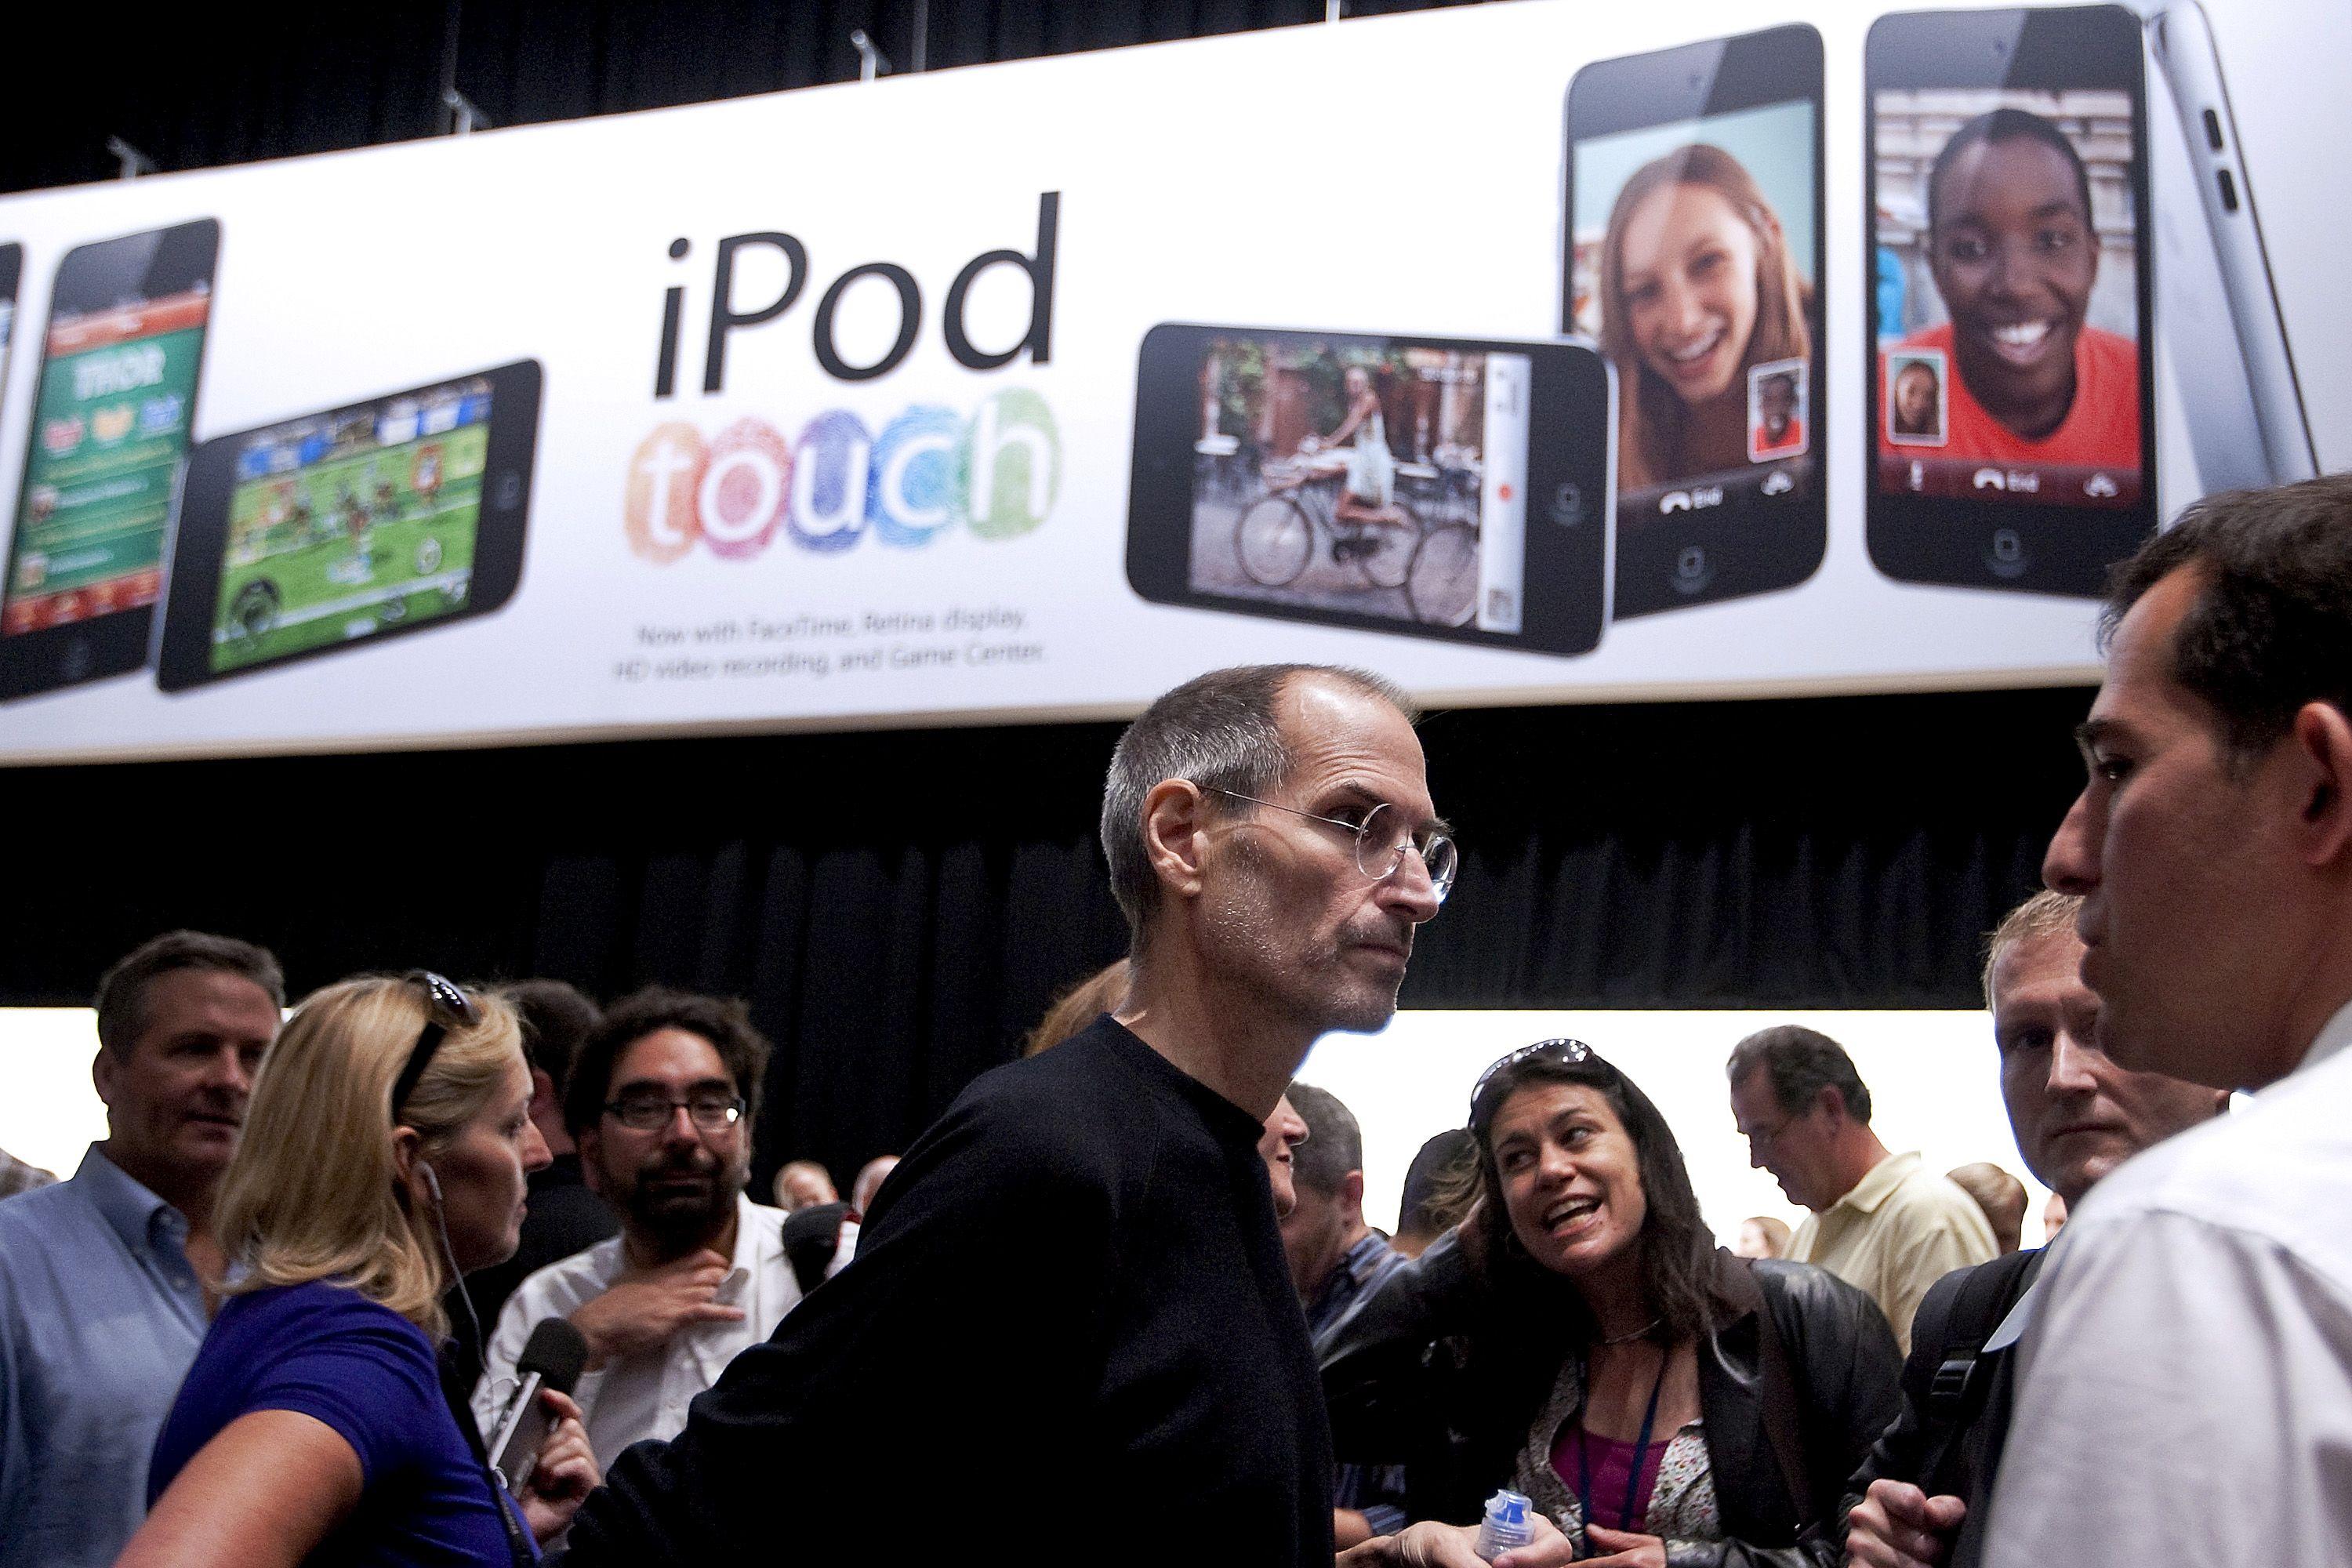 Steve Jobs App Store Logo - Steve Jobs Said the Apple Store Genius Bar Was 'So Idiotic'